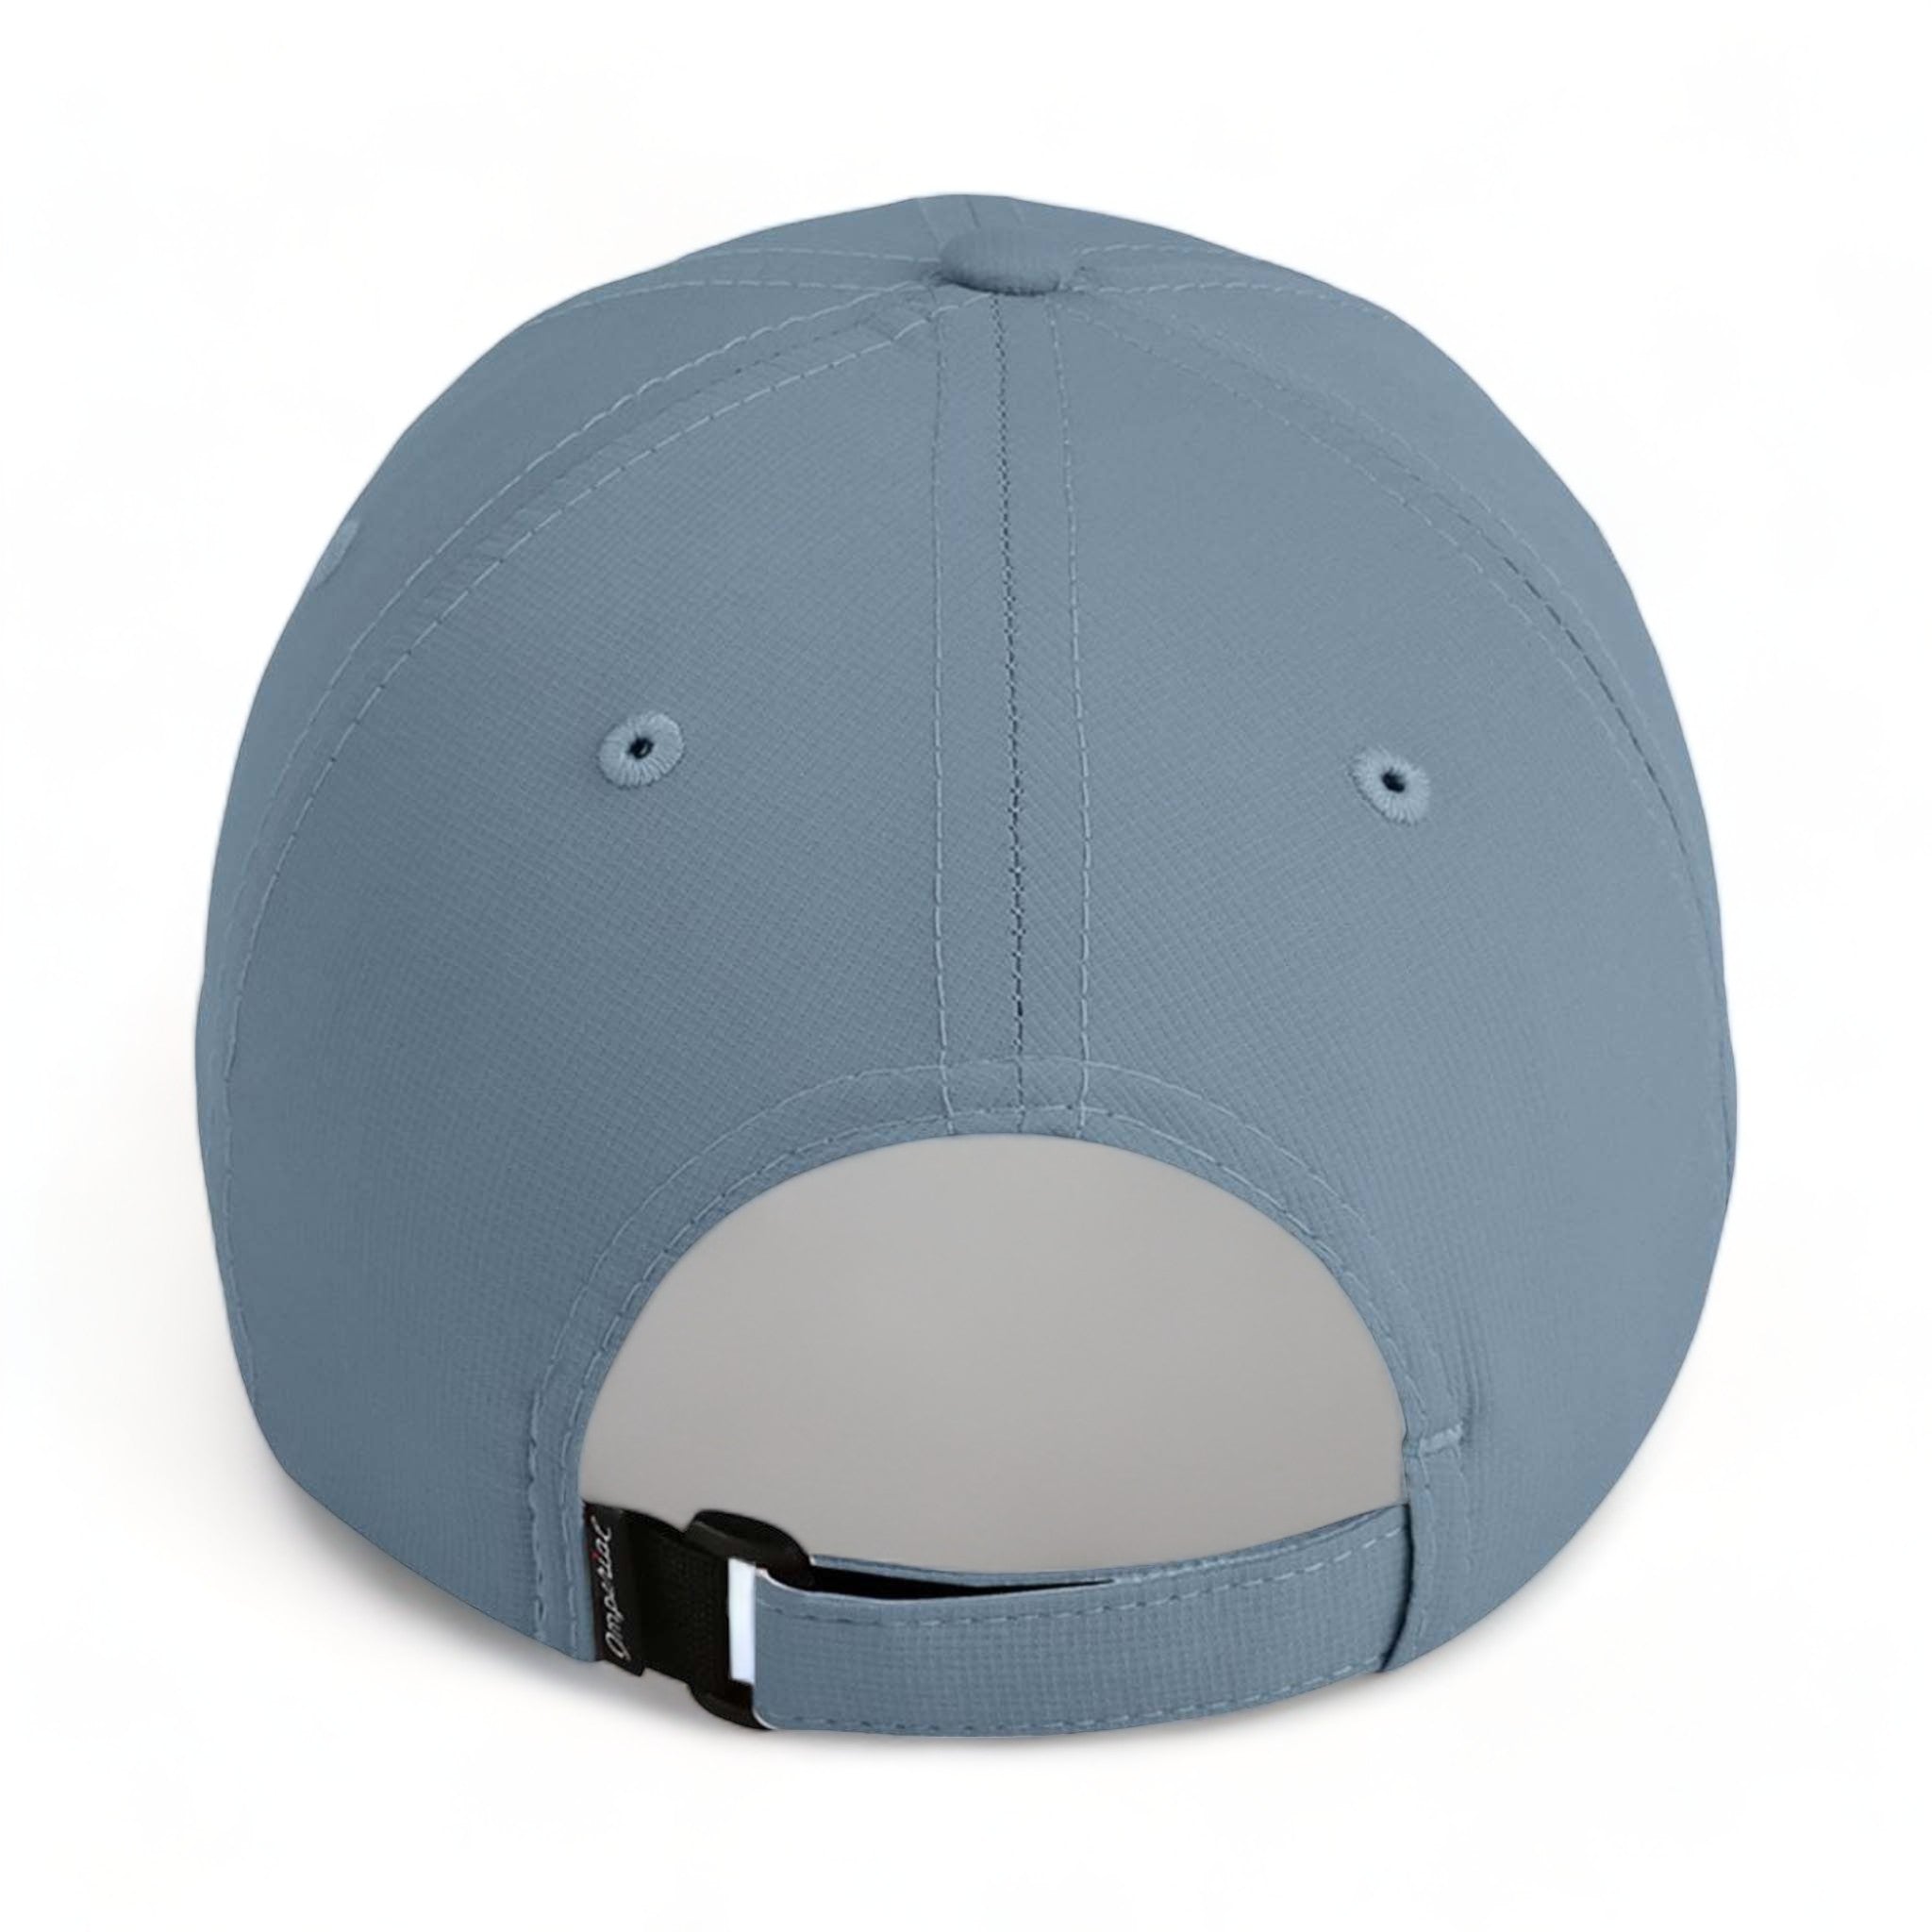 Back view of Imperial X210P custom hat in breaker blue